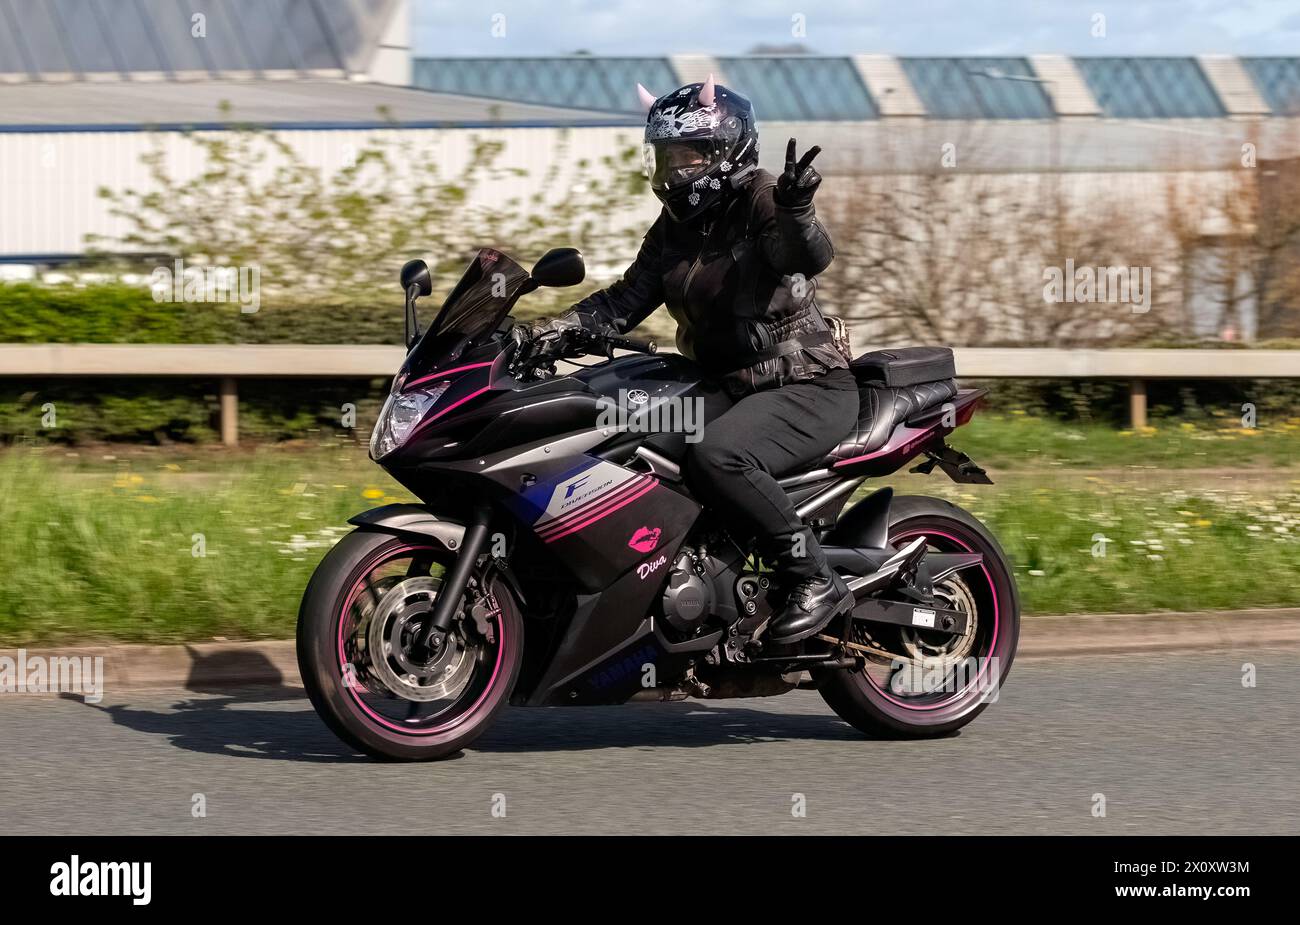 Milton Keynes,UK- Apr 14th 2024: 2014 Yamaha XJ ridden by a lady biker with pink horns on her helmet Stock Photo